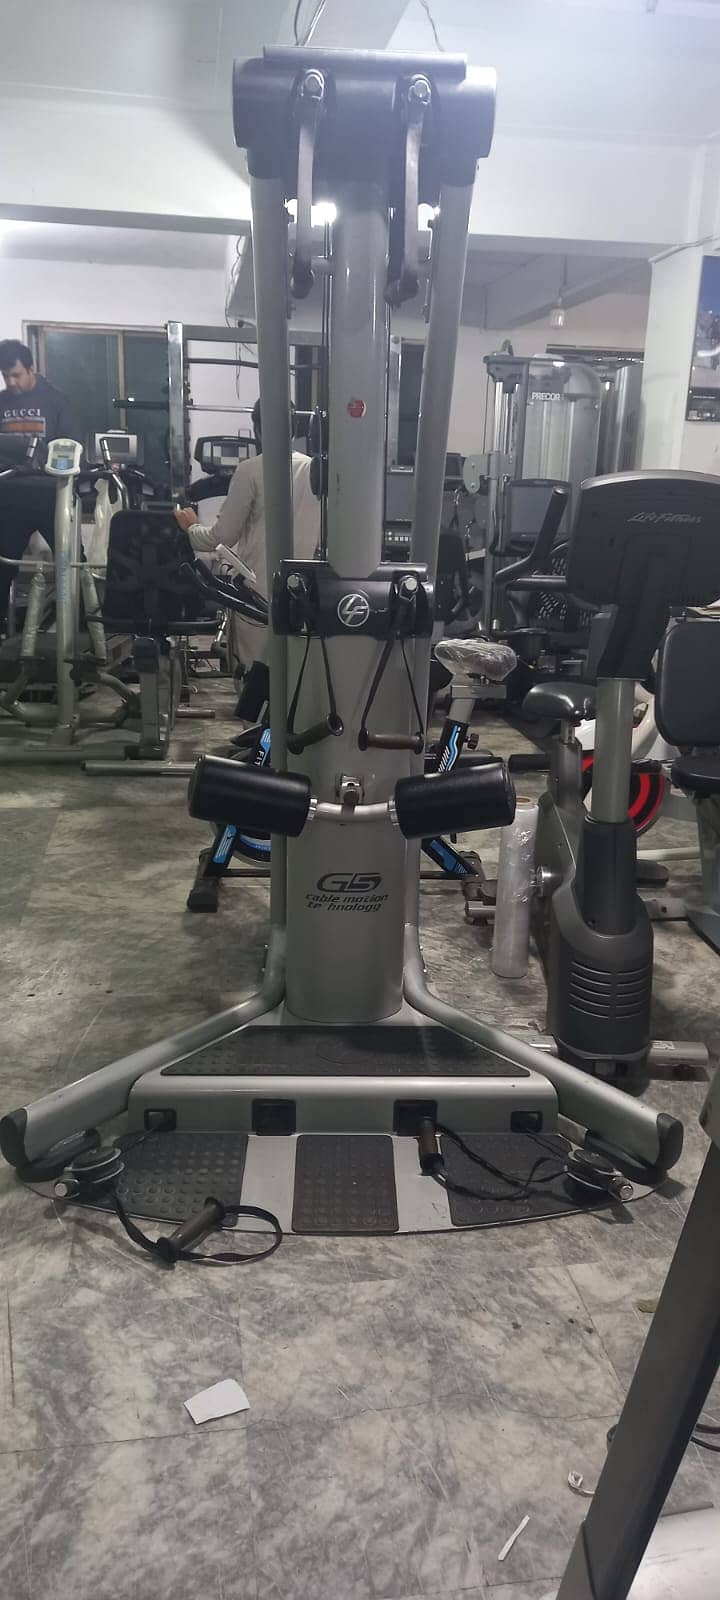 Power Rack Smith Trainer functional gym setup dumbbell treadmill plate 16